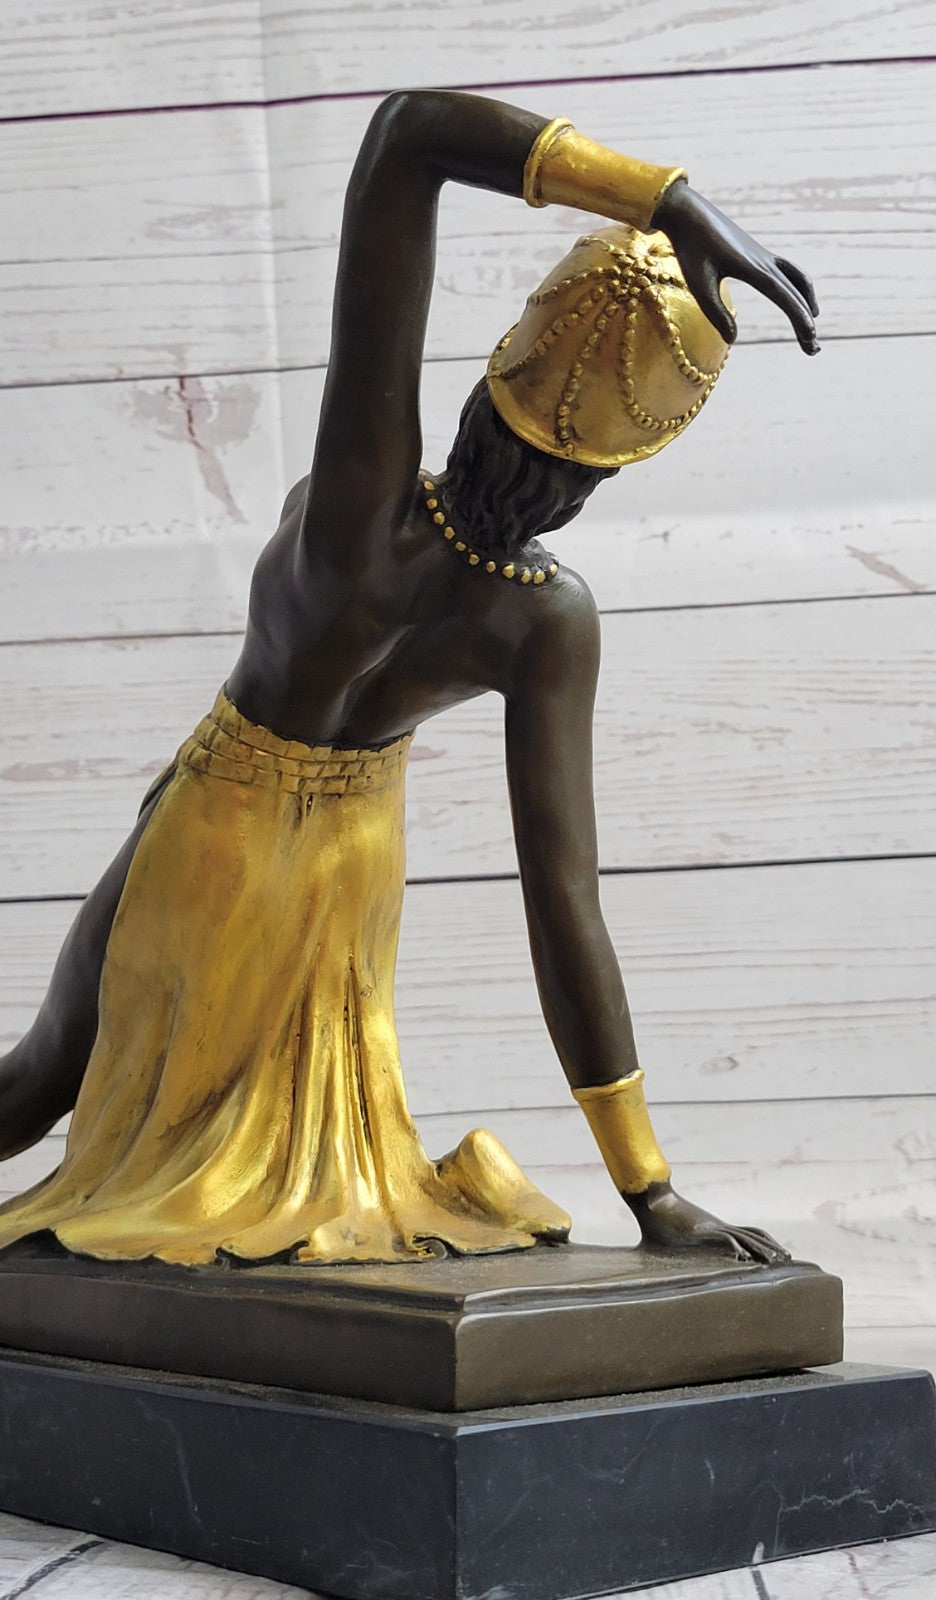 Handcrafted bronze sculpture SALE Deco Art Dancer Exotic Chiparus Signed